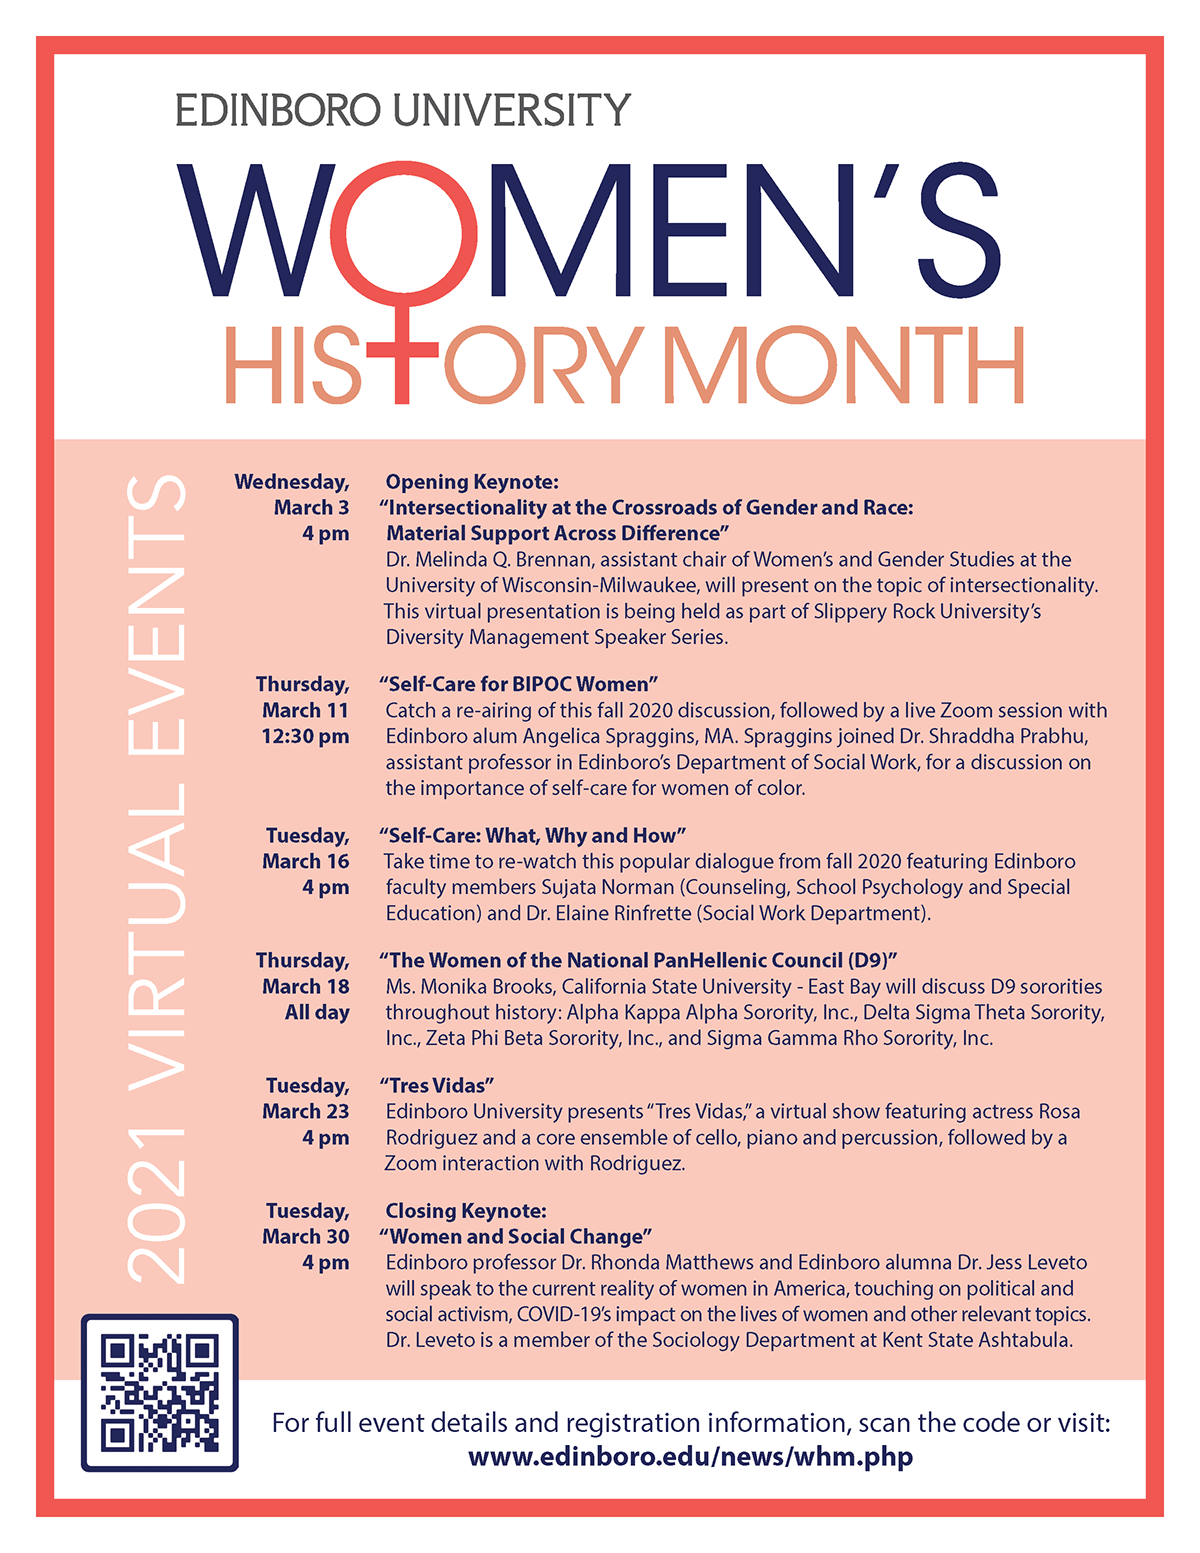 Edinboro University history logo month women